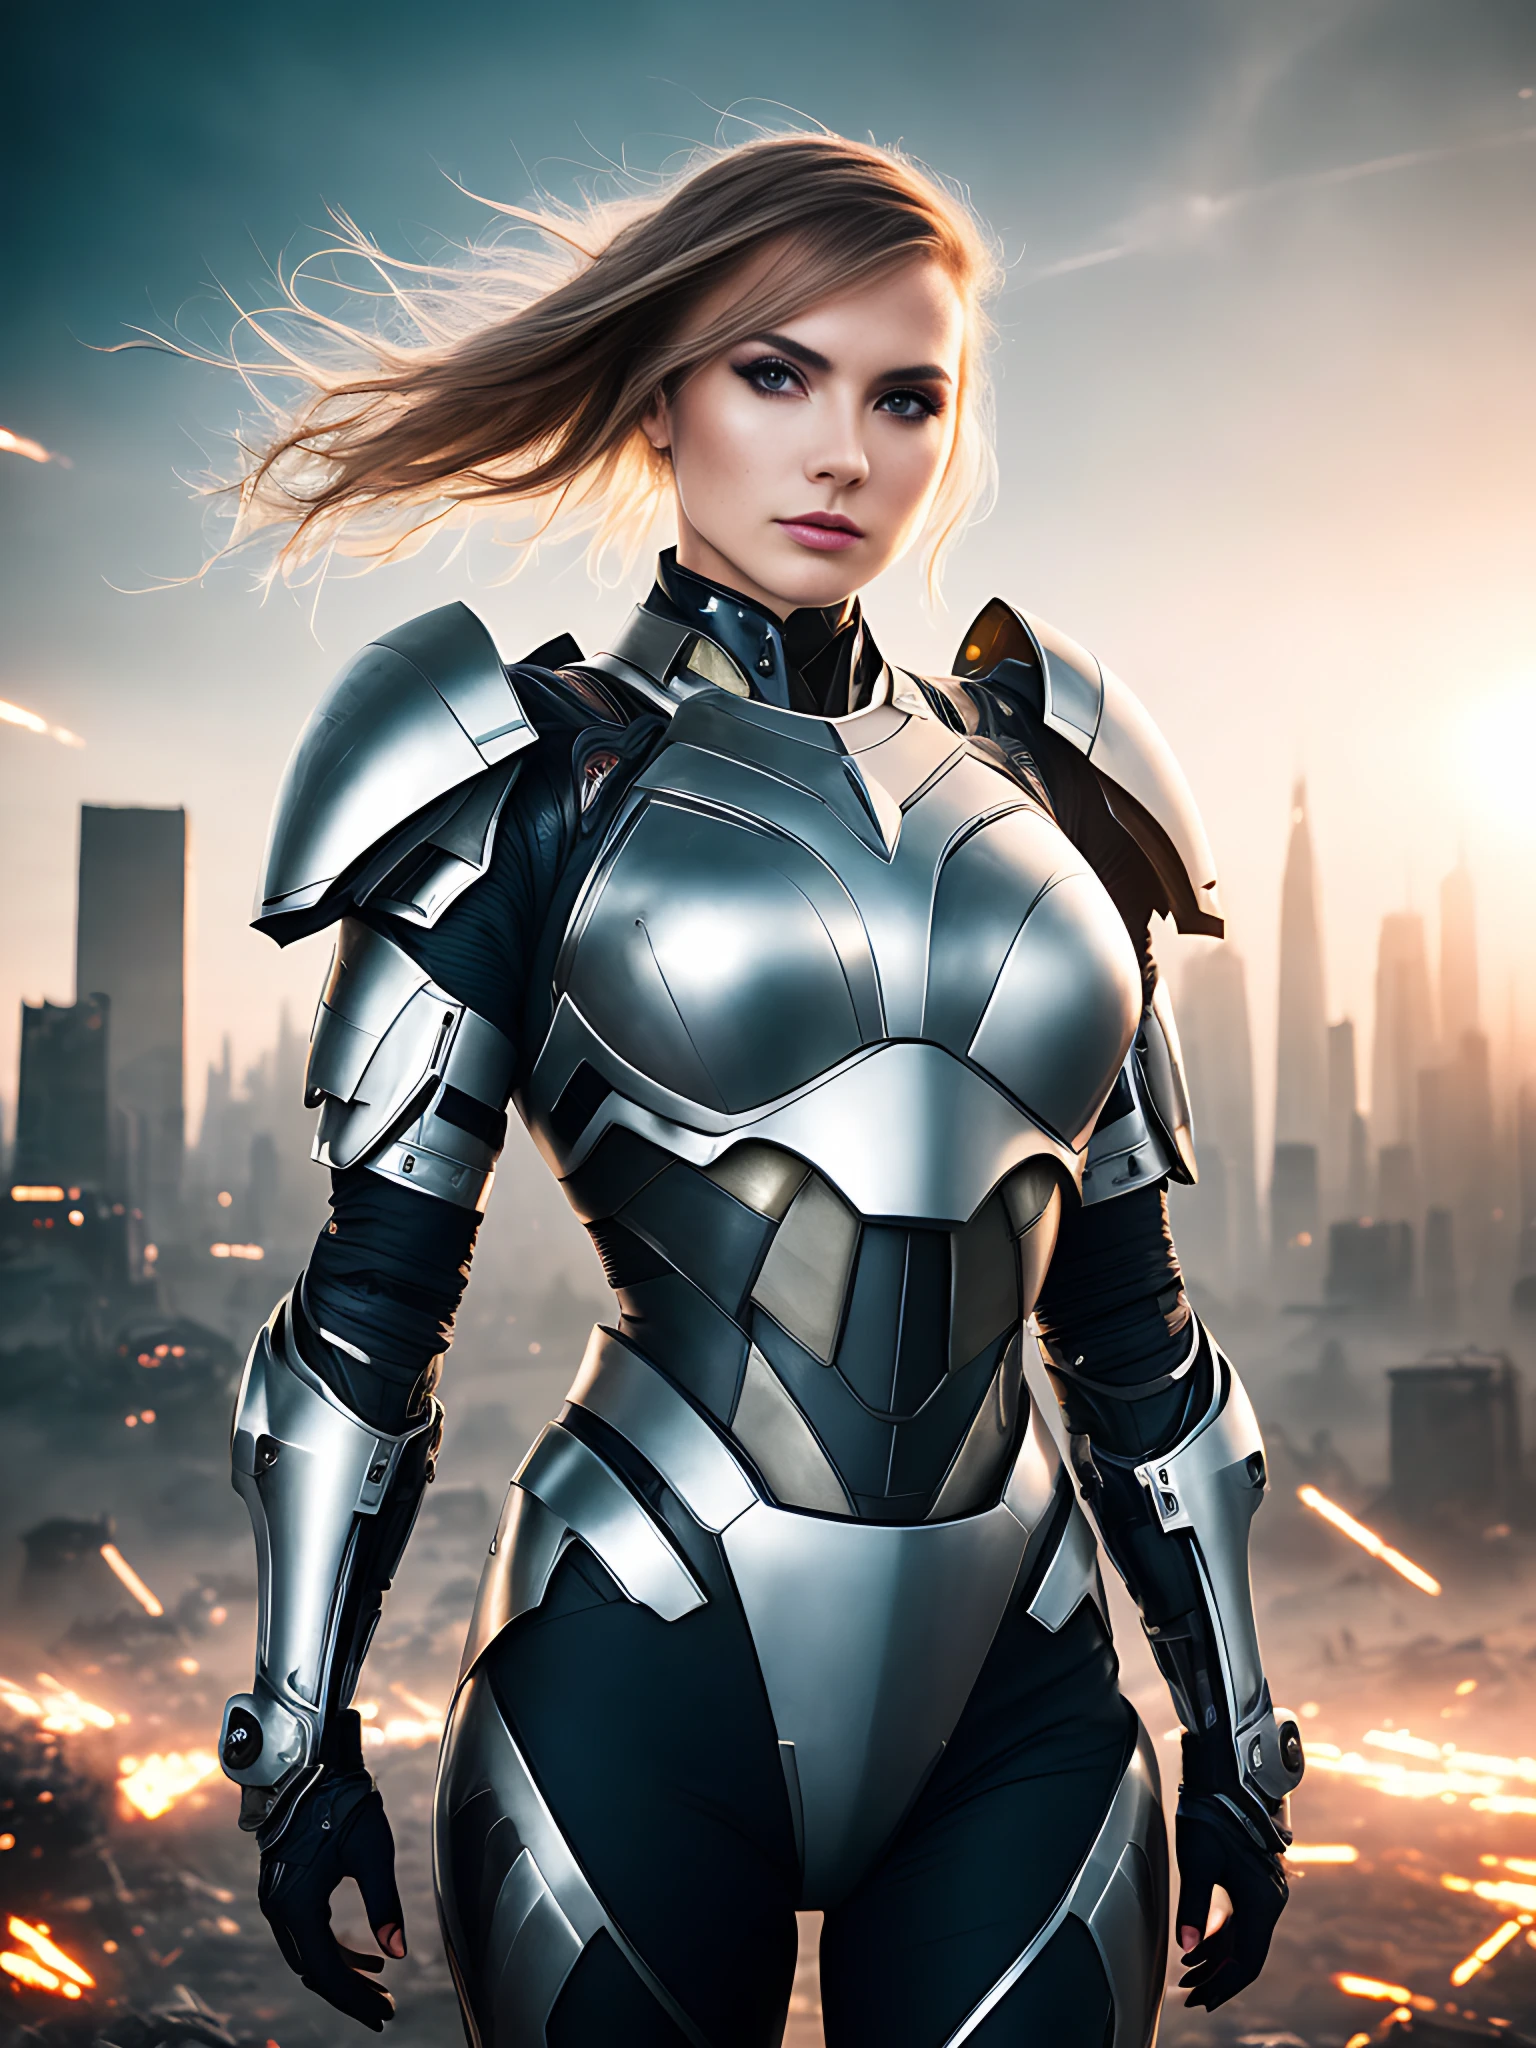 modelshoot style, award winning photo of a beautiful cyborg woman, wearing titanium futuristic armor, destroyed futuristic city in background, high contrast, soft lighting, backlighting, bloom, light sparkles, chromatic aberration, sharp focus